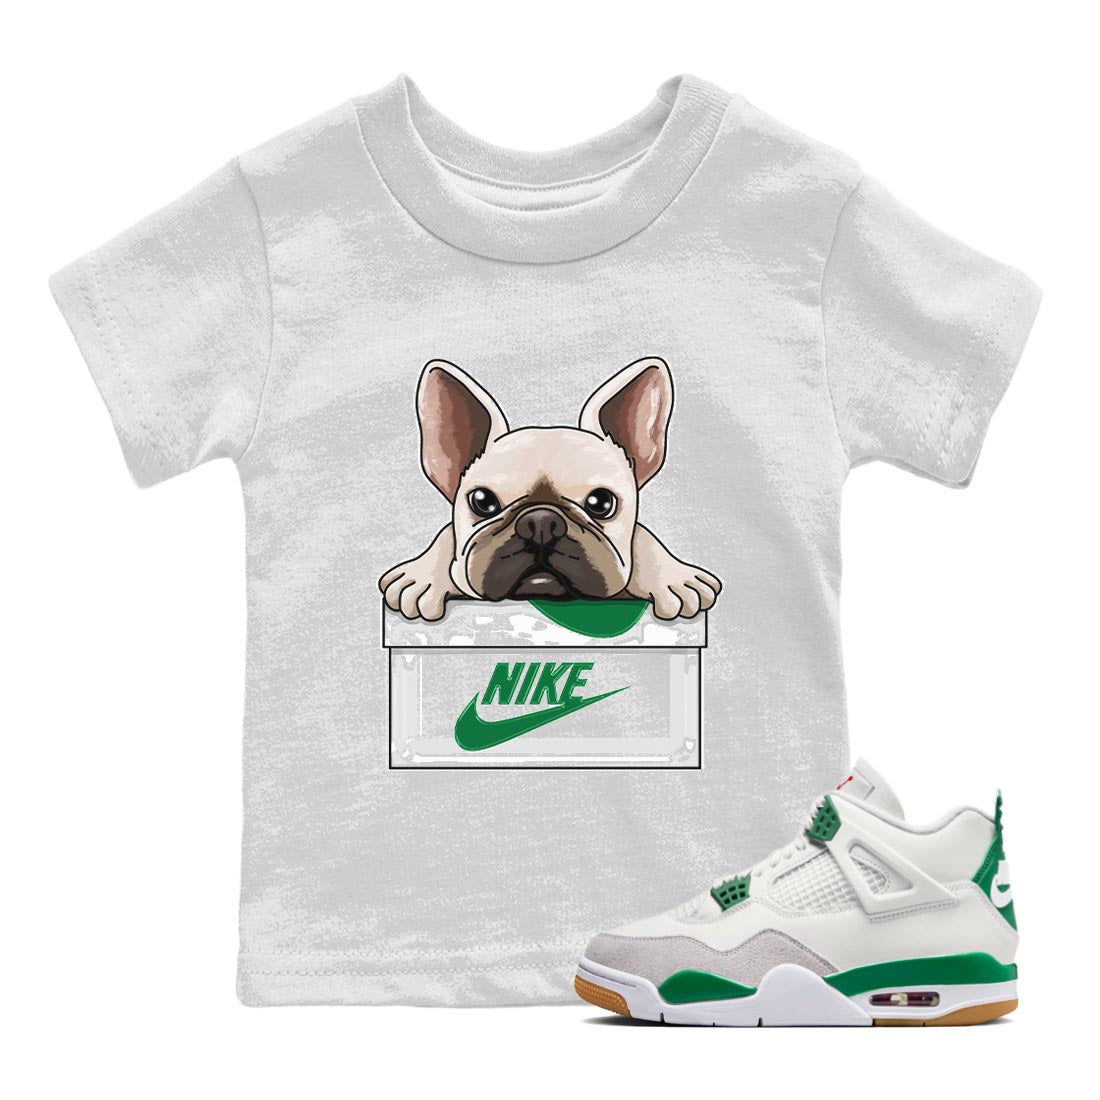 Jordan 4 Pine Green SB Sneaker Match Tees French Bulldog Sneaker Tees 4s Pine Green Nike SB Sneaker Tees Sneaker Release Shirts Kids Shirts White 1